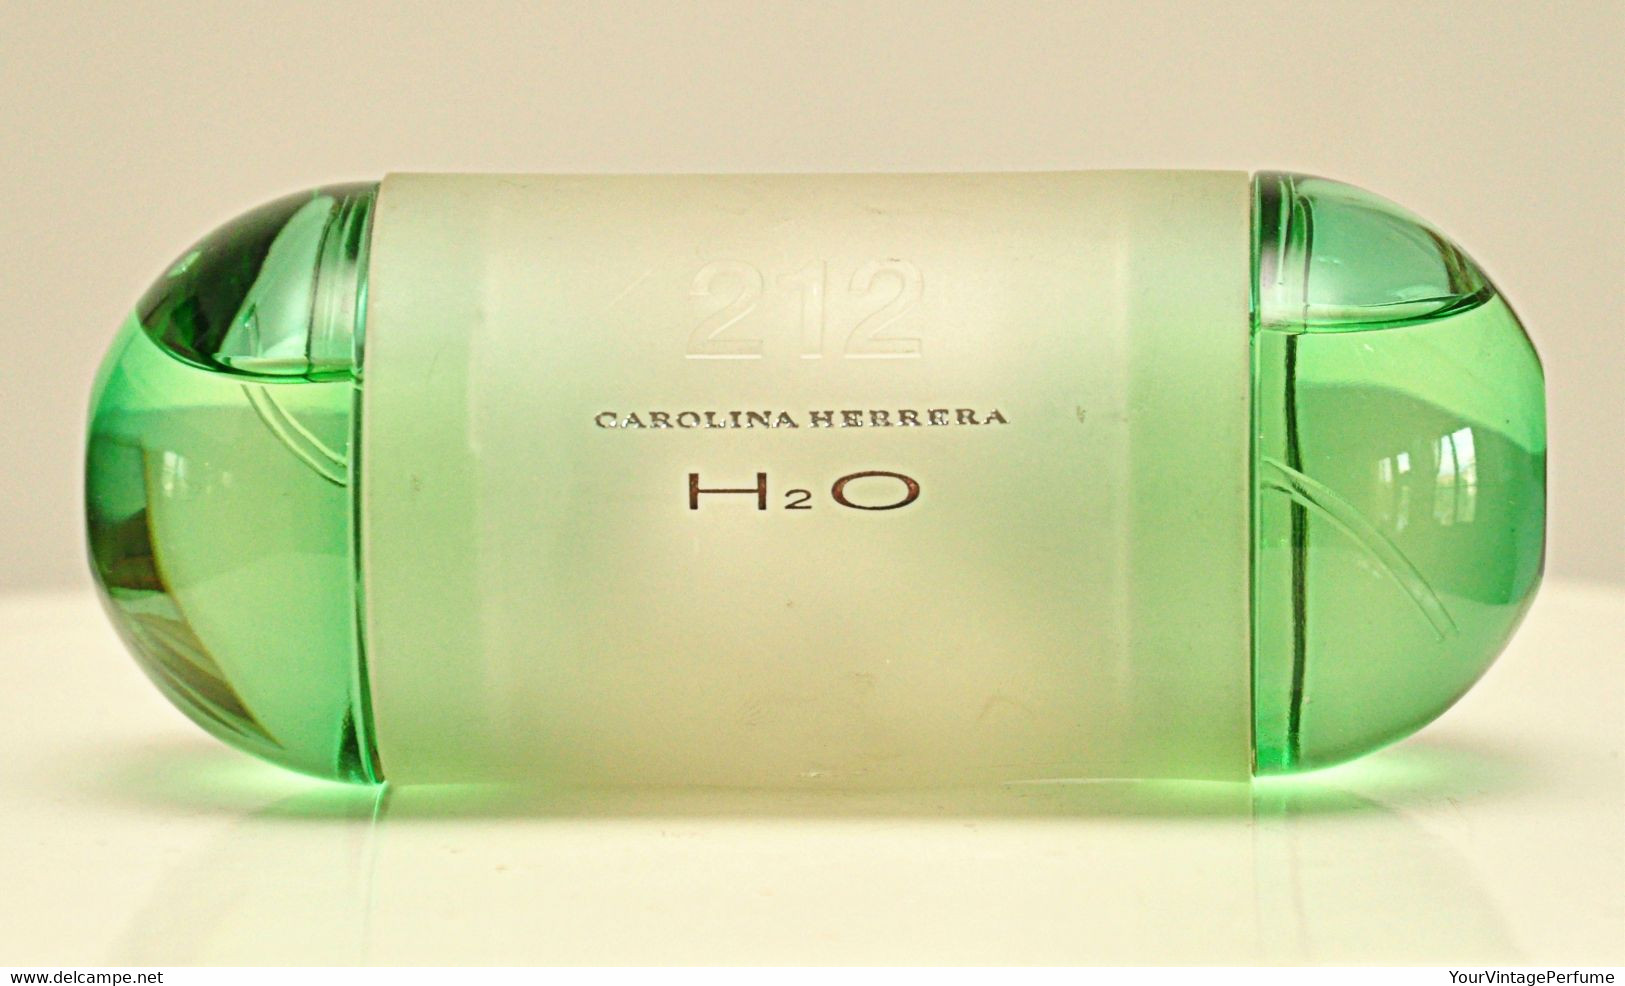 Carolina Herrera 212 H2O Eau De Toilette Edt 60ml 2 Fl. Oz. Spray Perfume For Woman Rare Vintage 2003 - Men